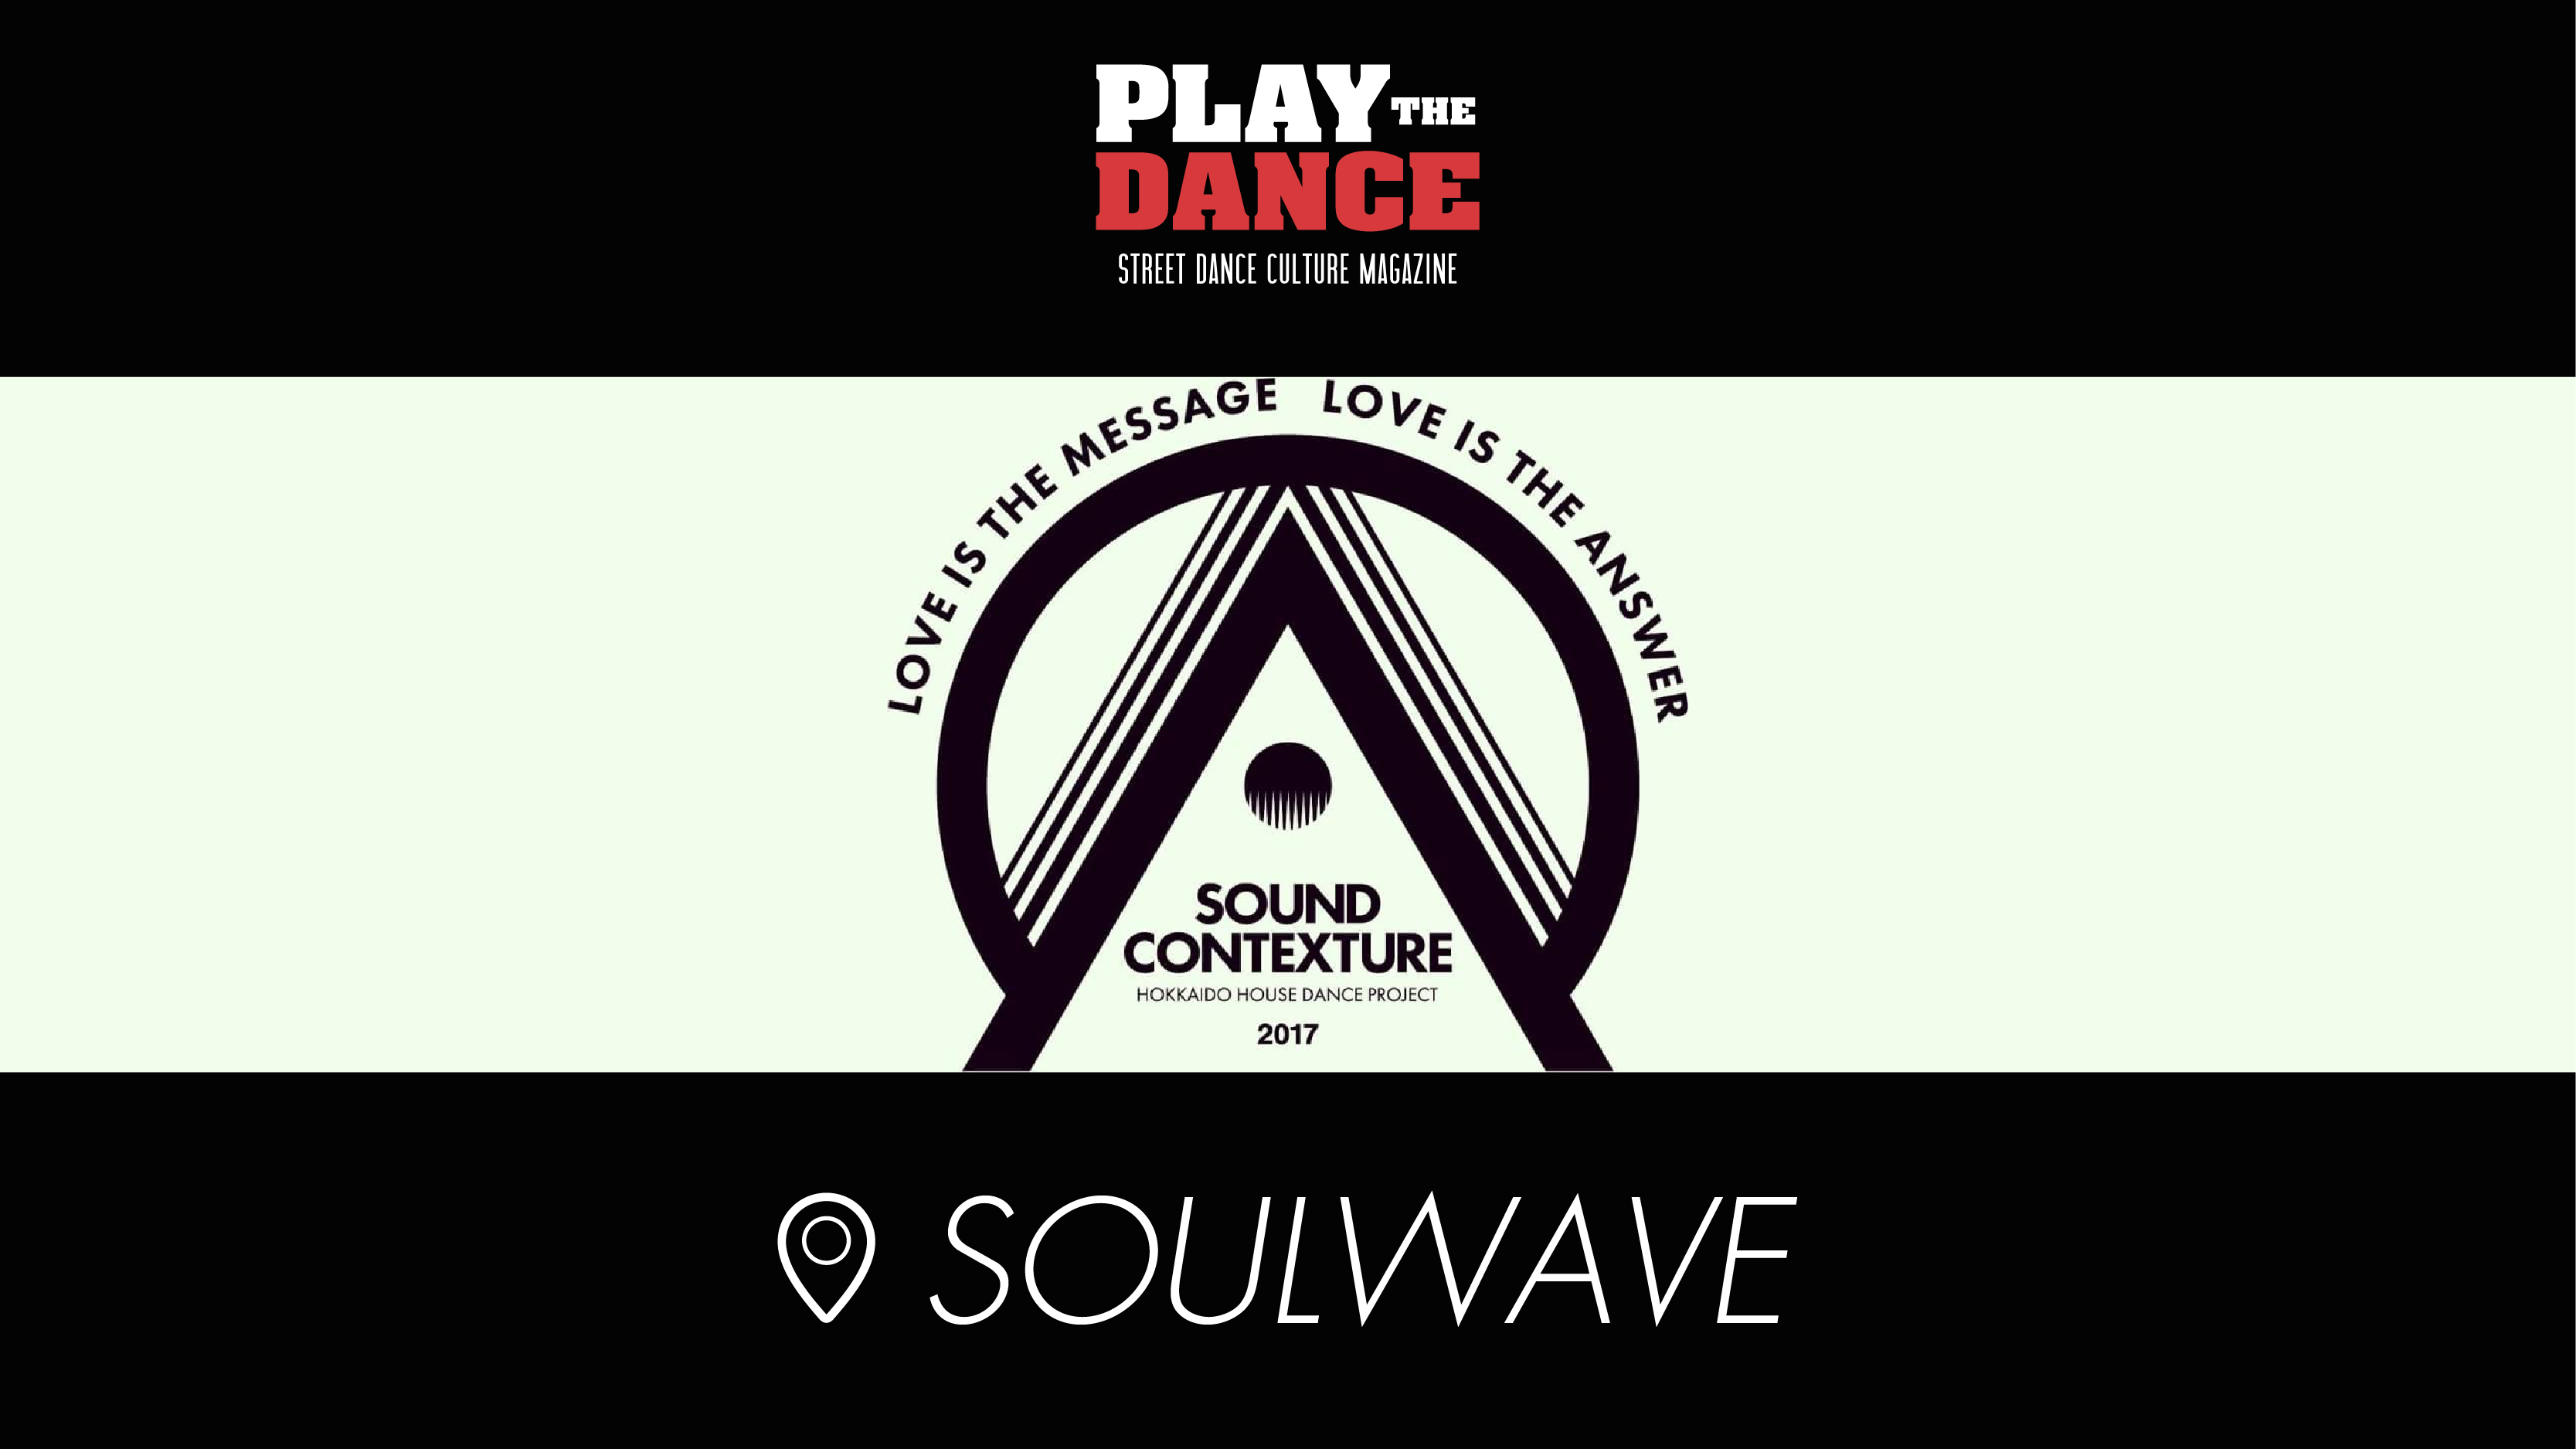 SoundContexture Presents HOUSE DANCE BATTLE North On The Floor Vol.1